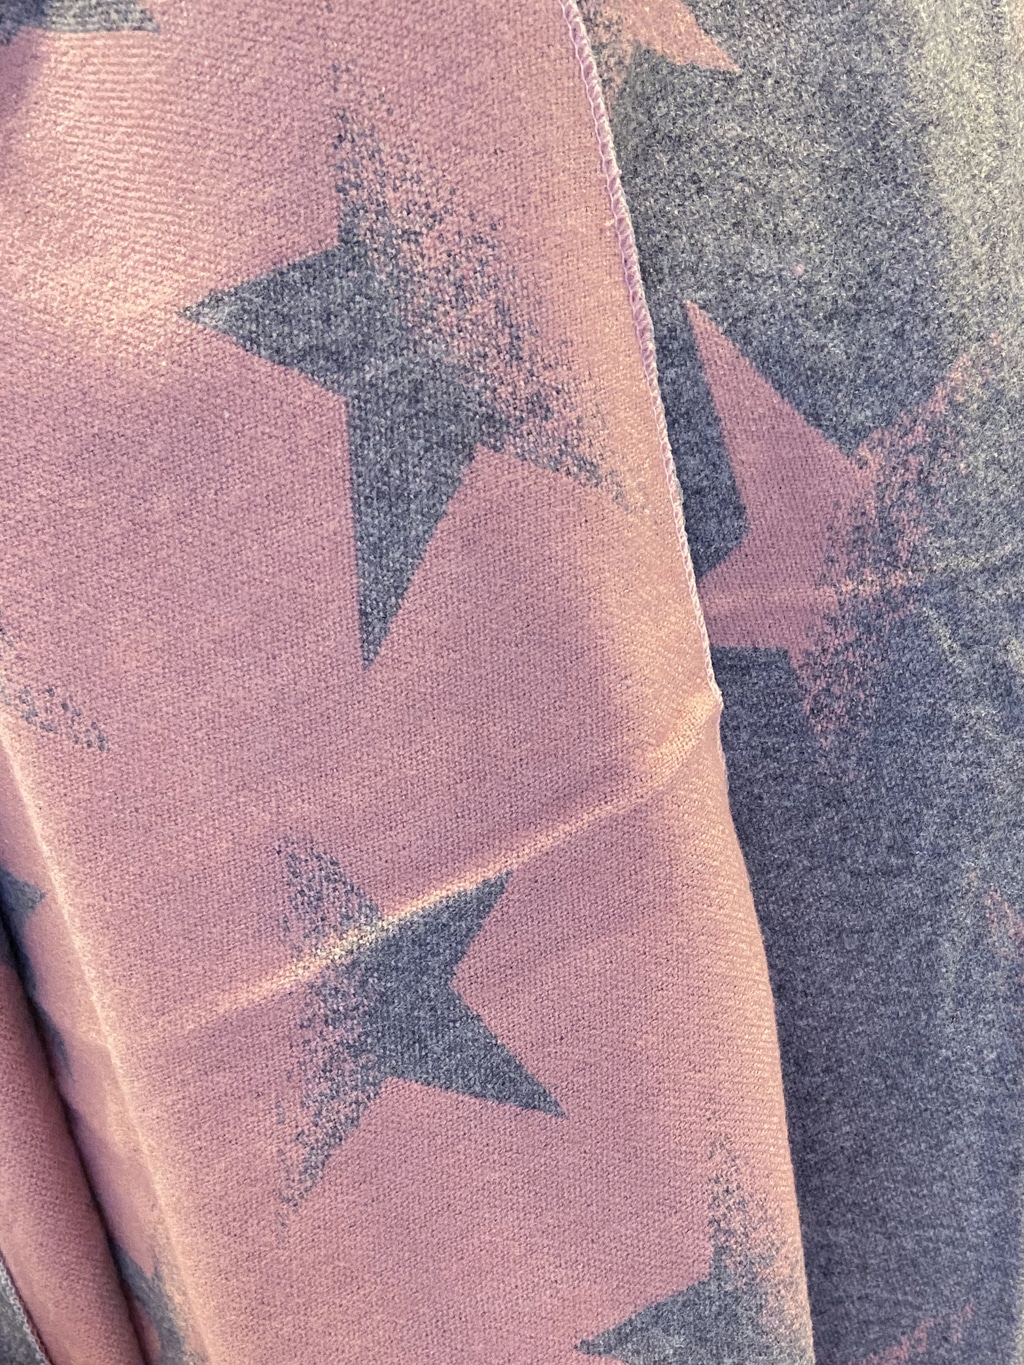 grey pink star scarf close up